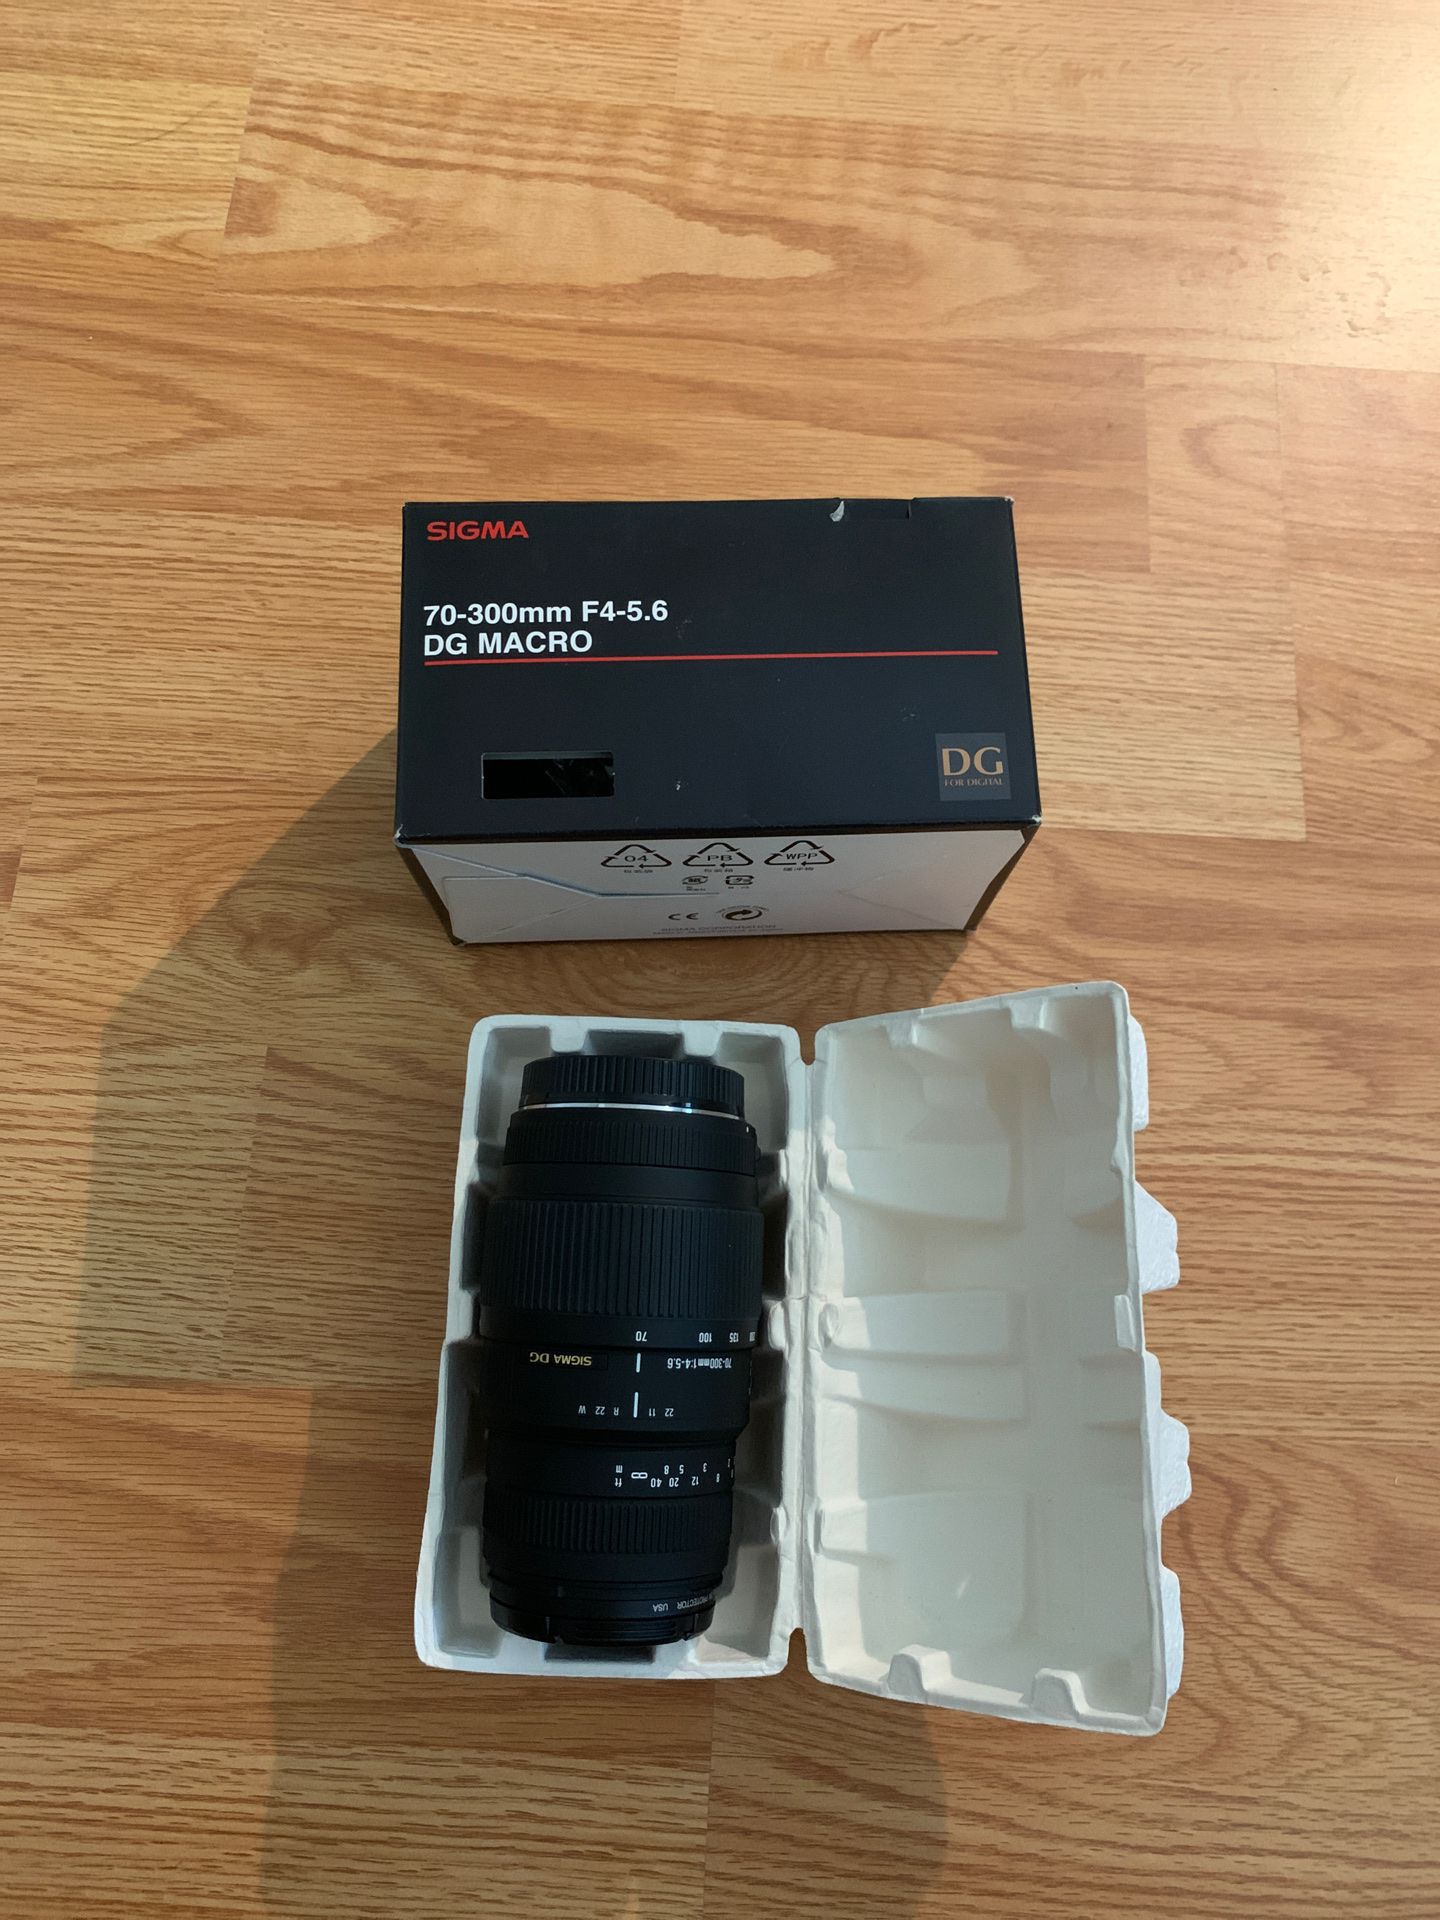 Sigma 70-300mm dg macro lens for slr canon camera